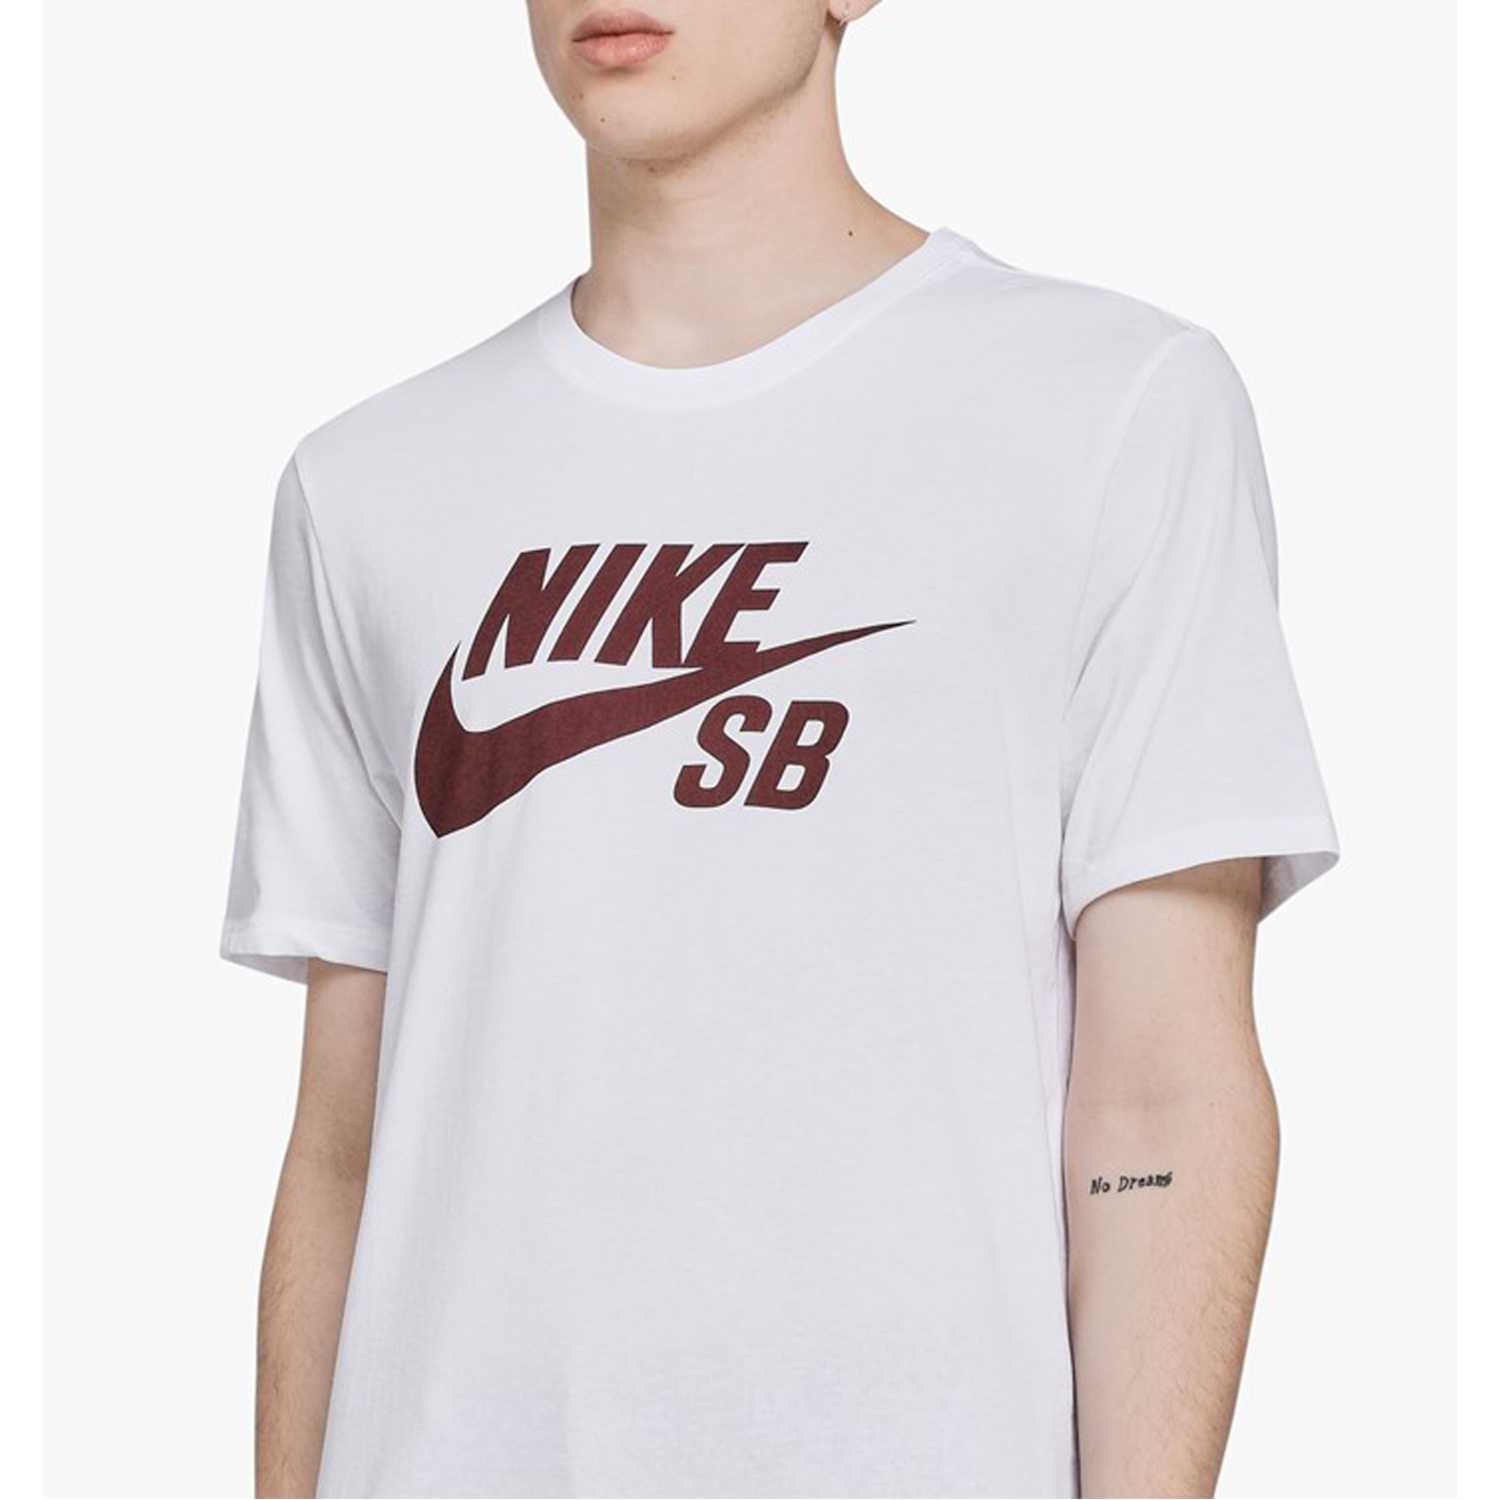 Playera Nike SB Logo – Dealer skate shop